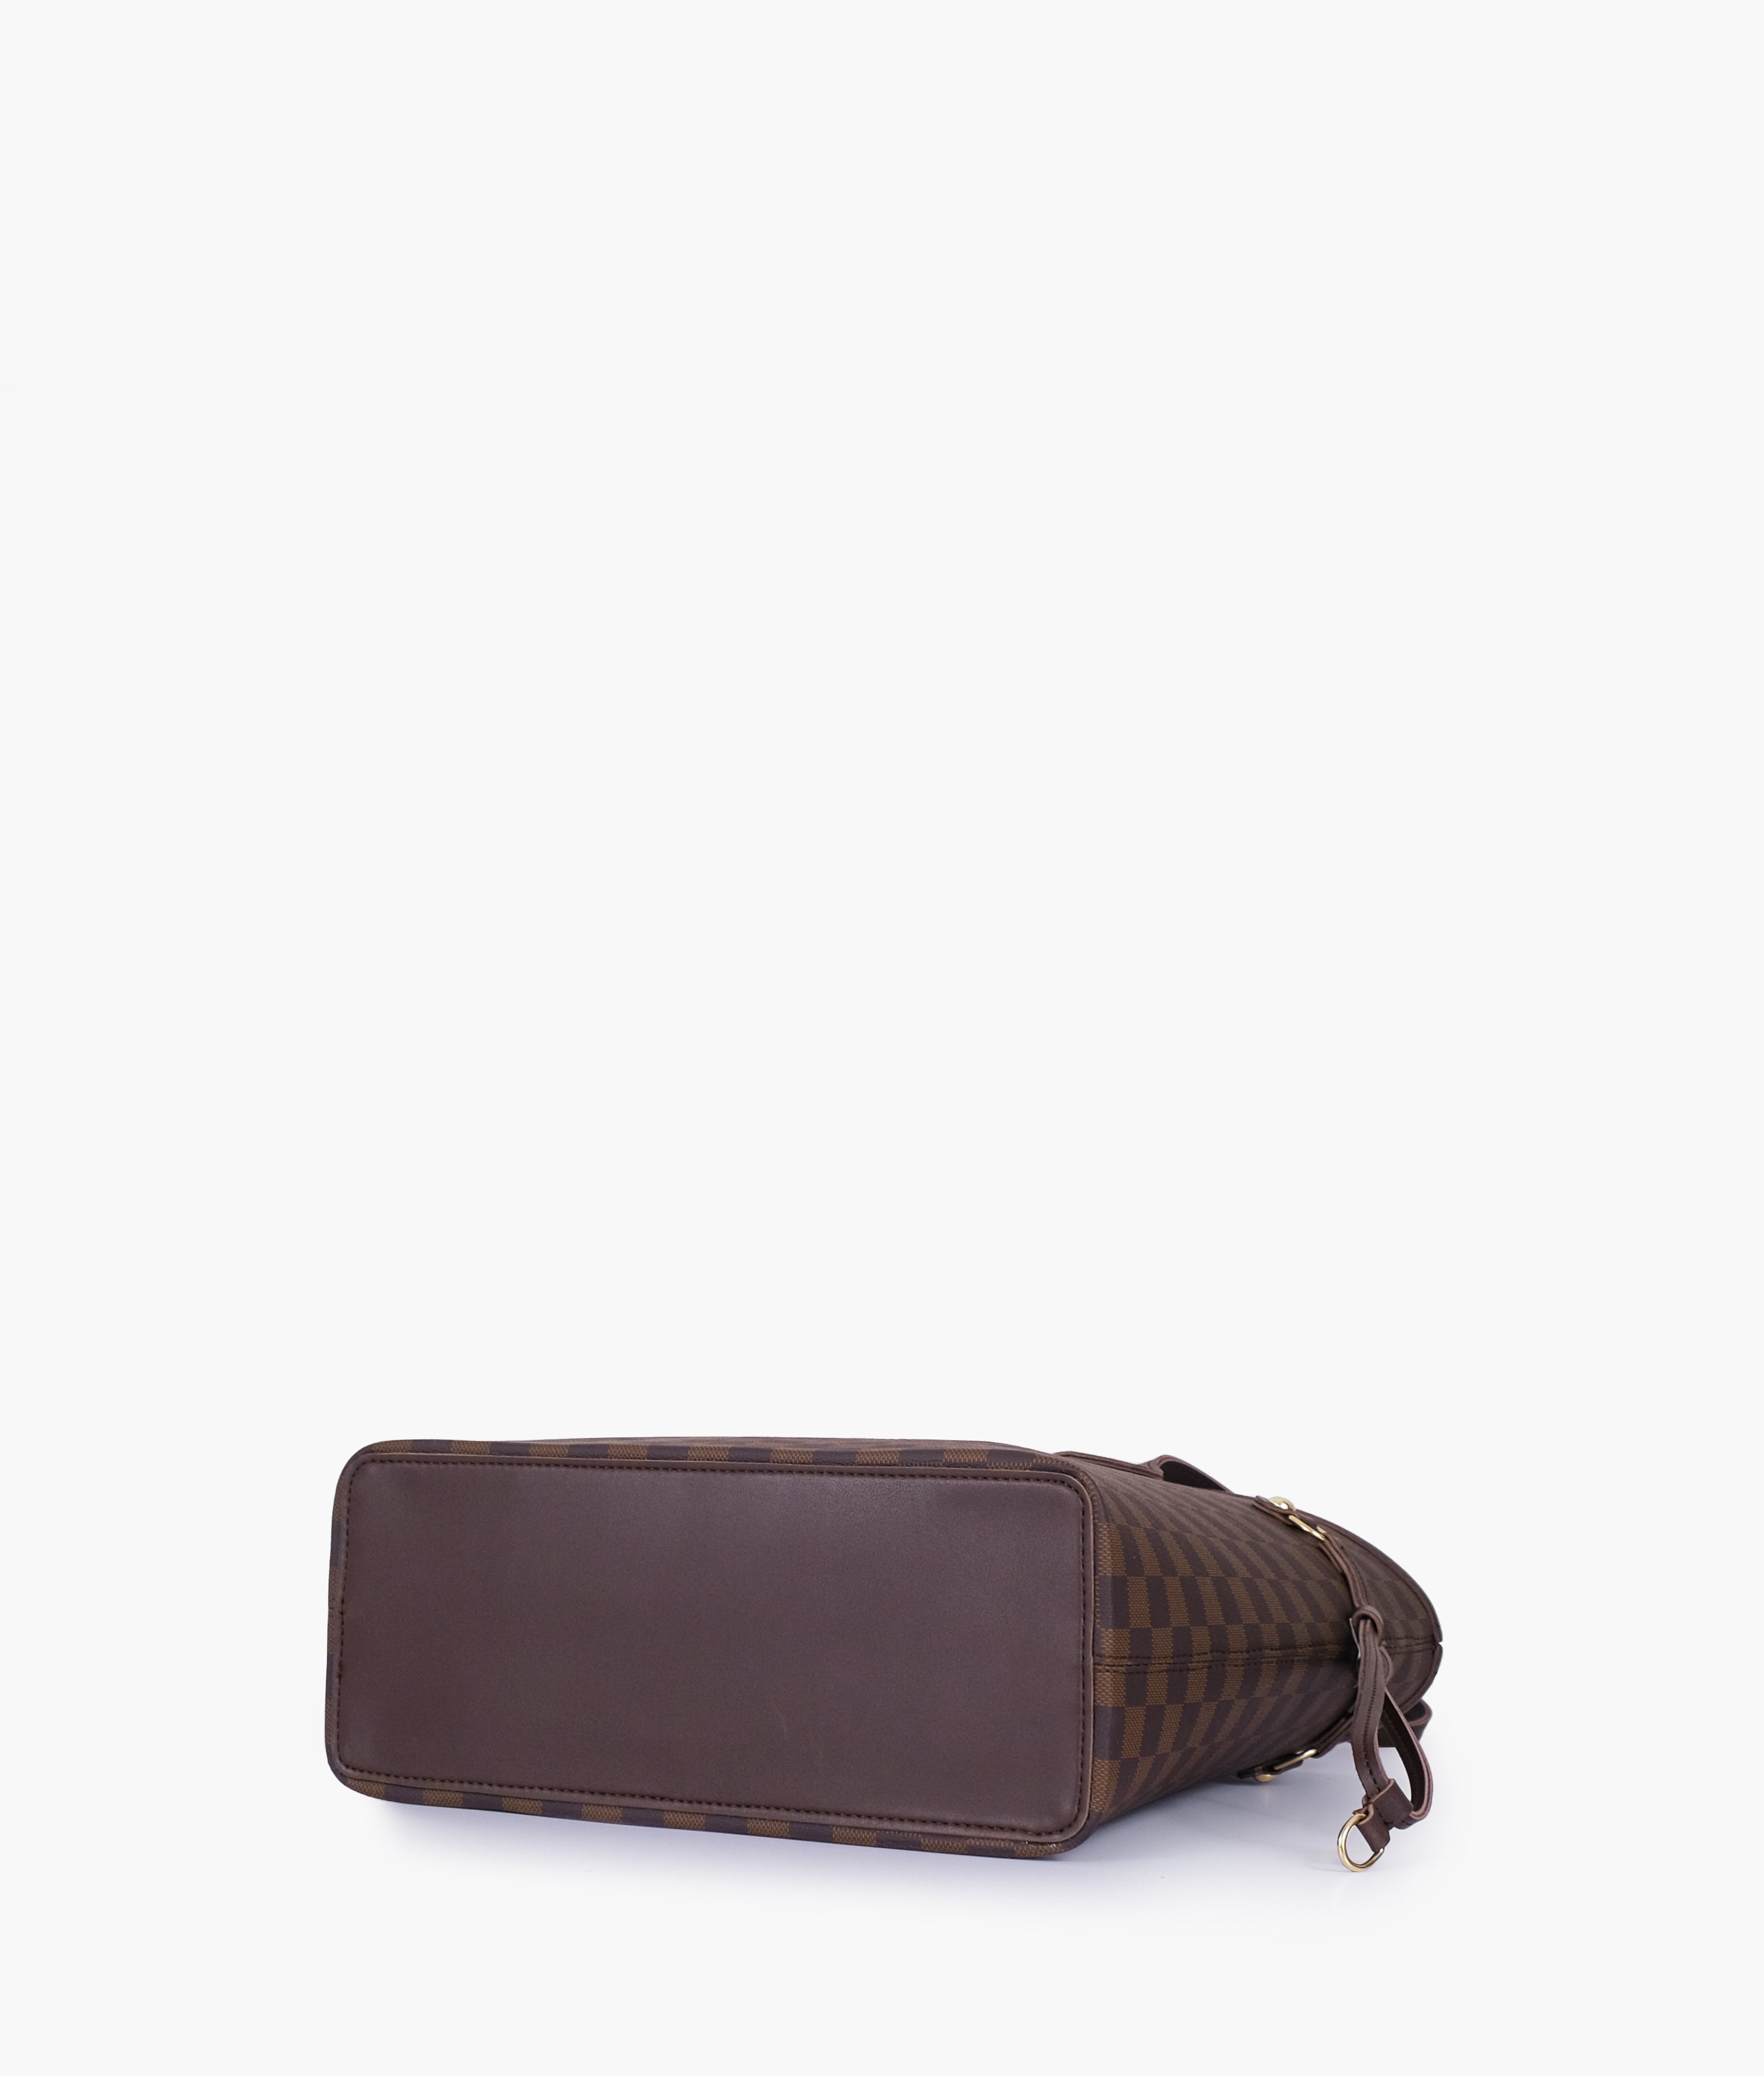 Dark brown checkered neverfull tote bag